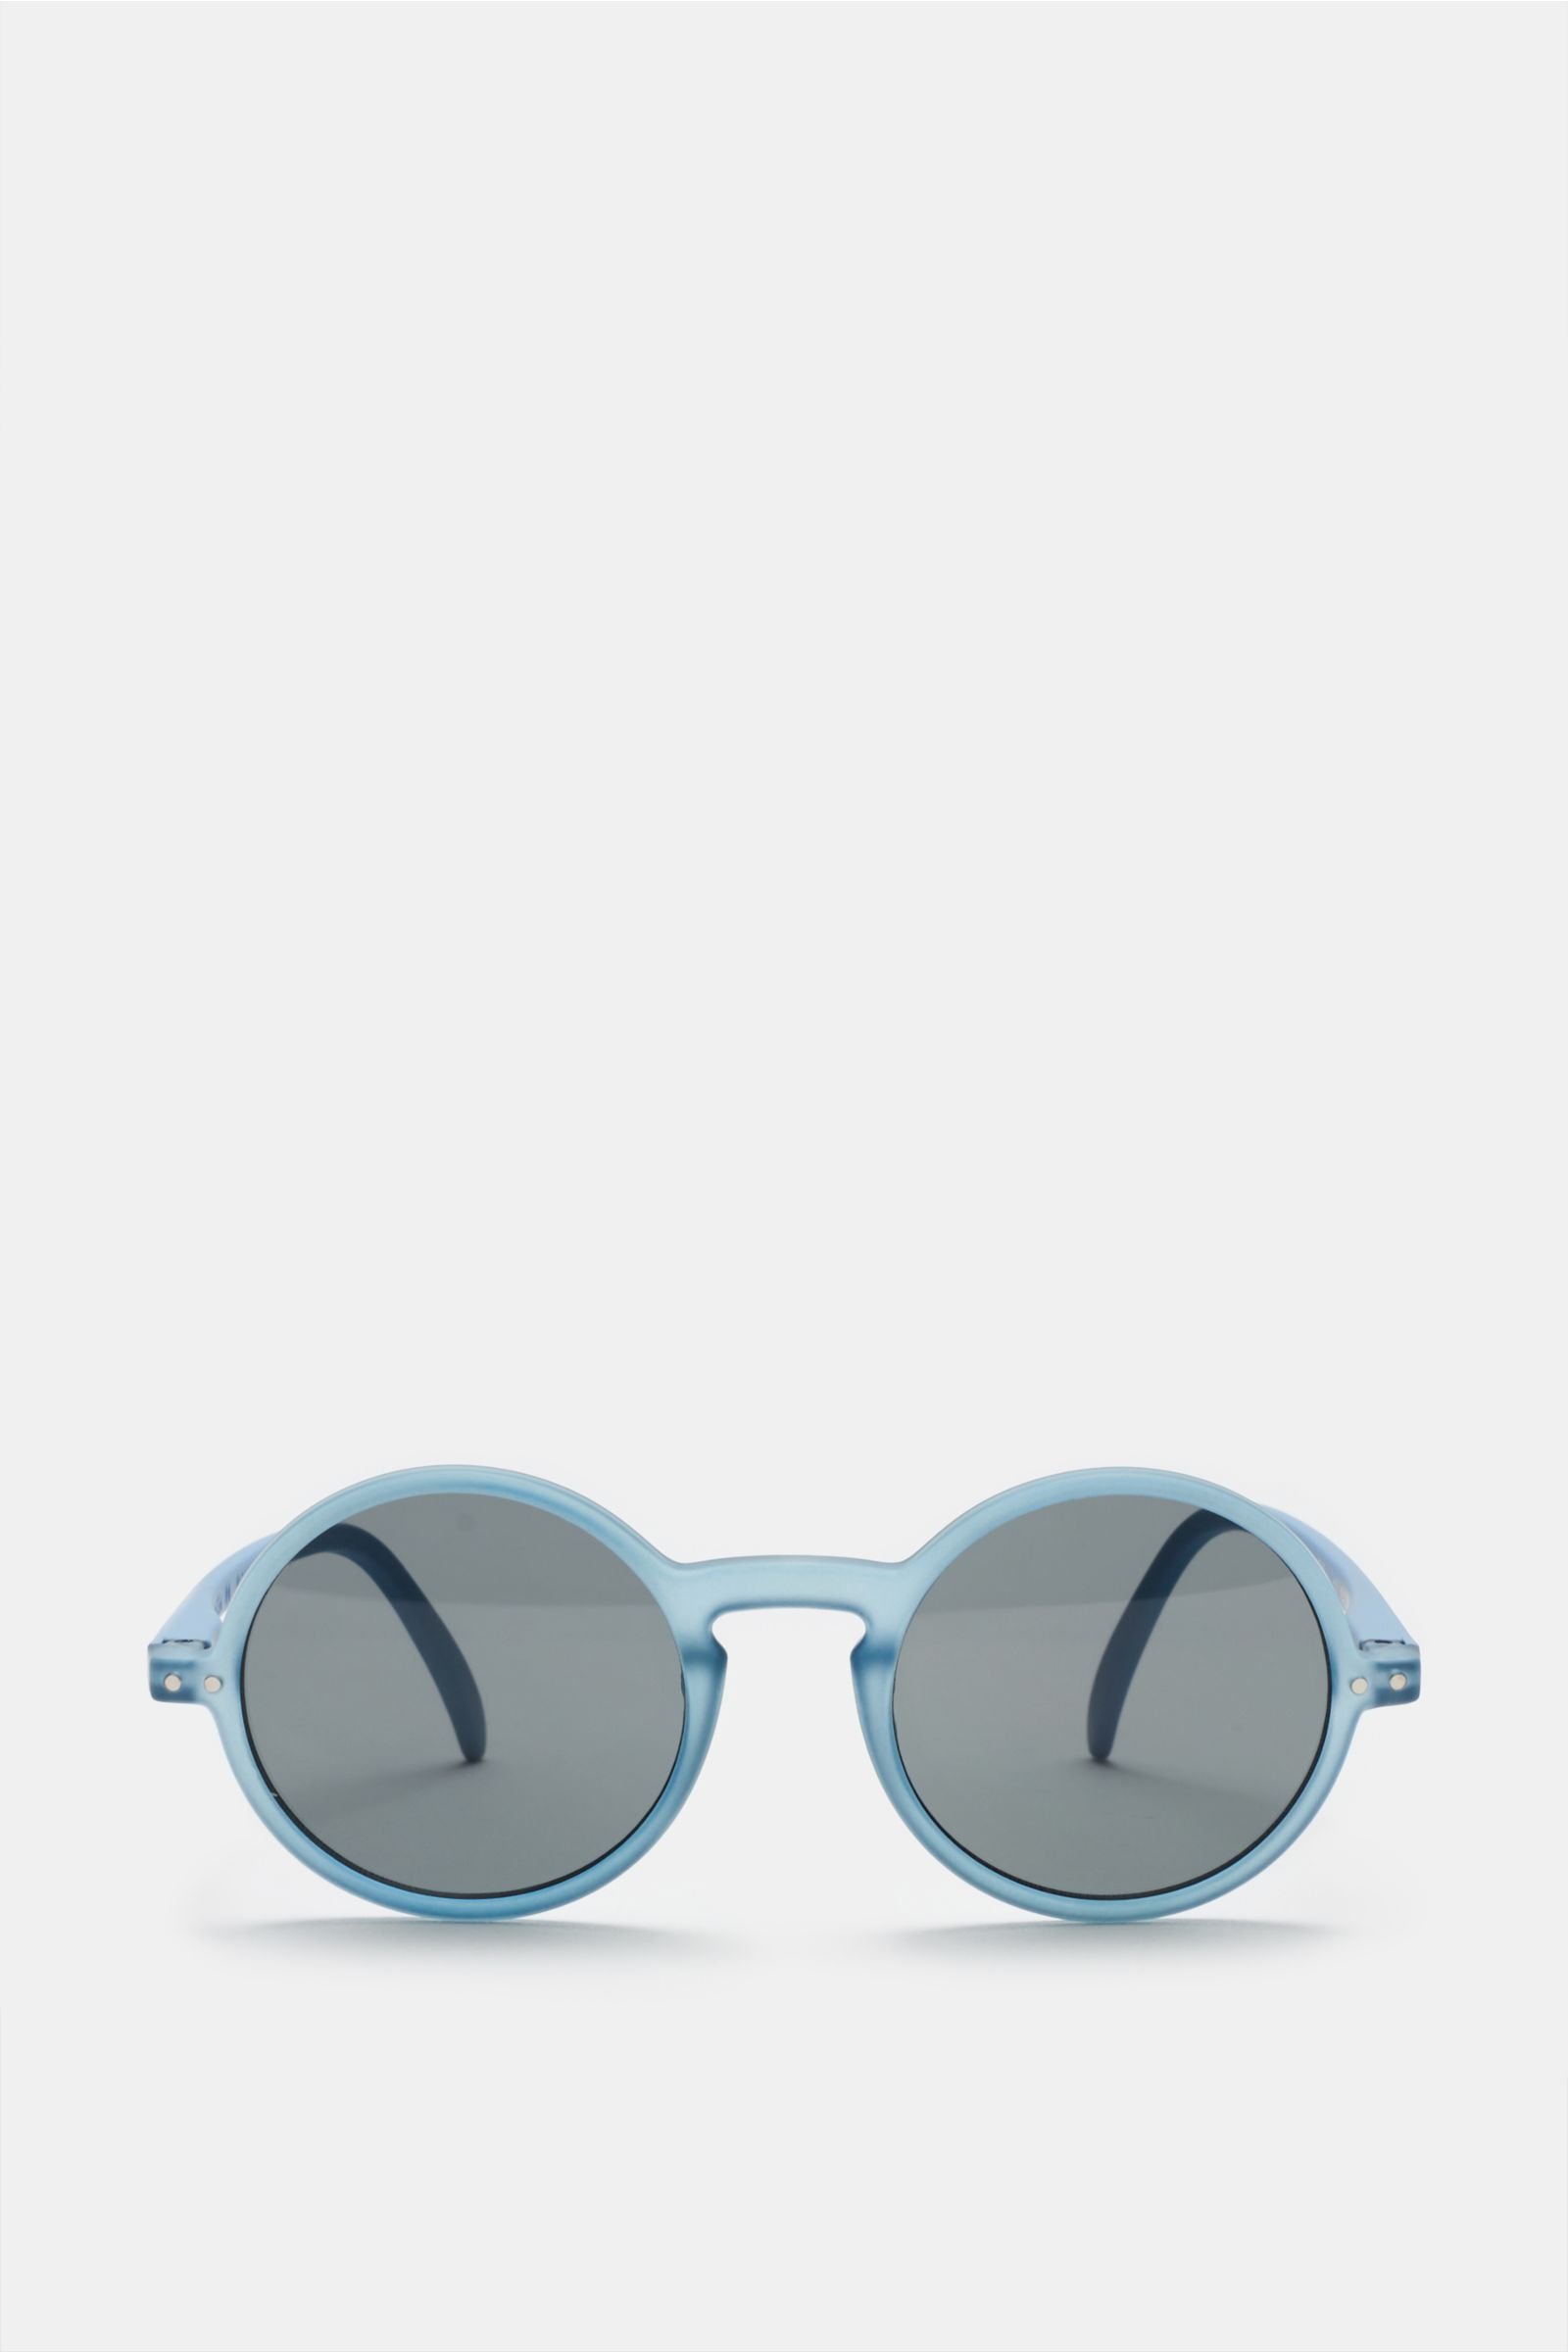 Sunglasses '#G Sun' smoky blue/grey